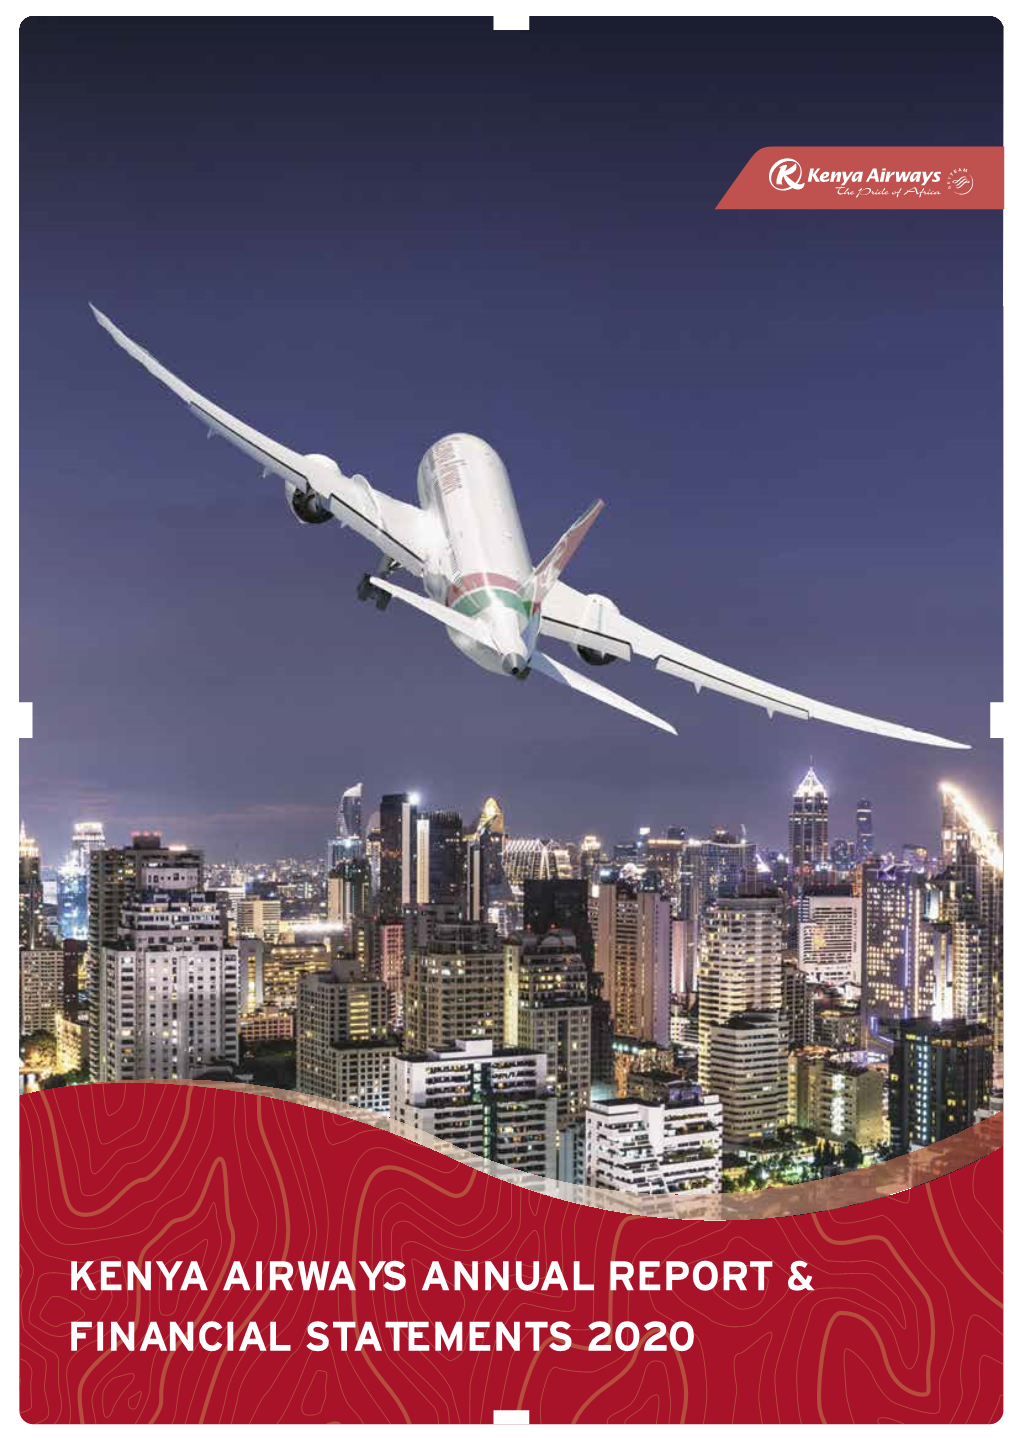 Kenya Airways Annual Report & Financial Statements 2020